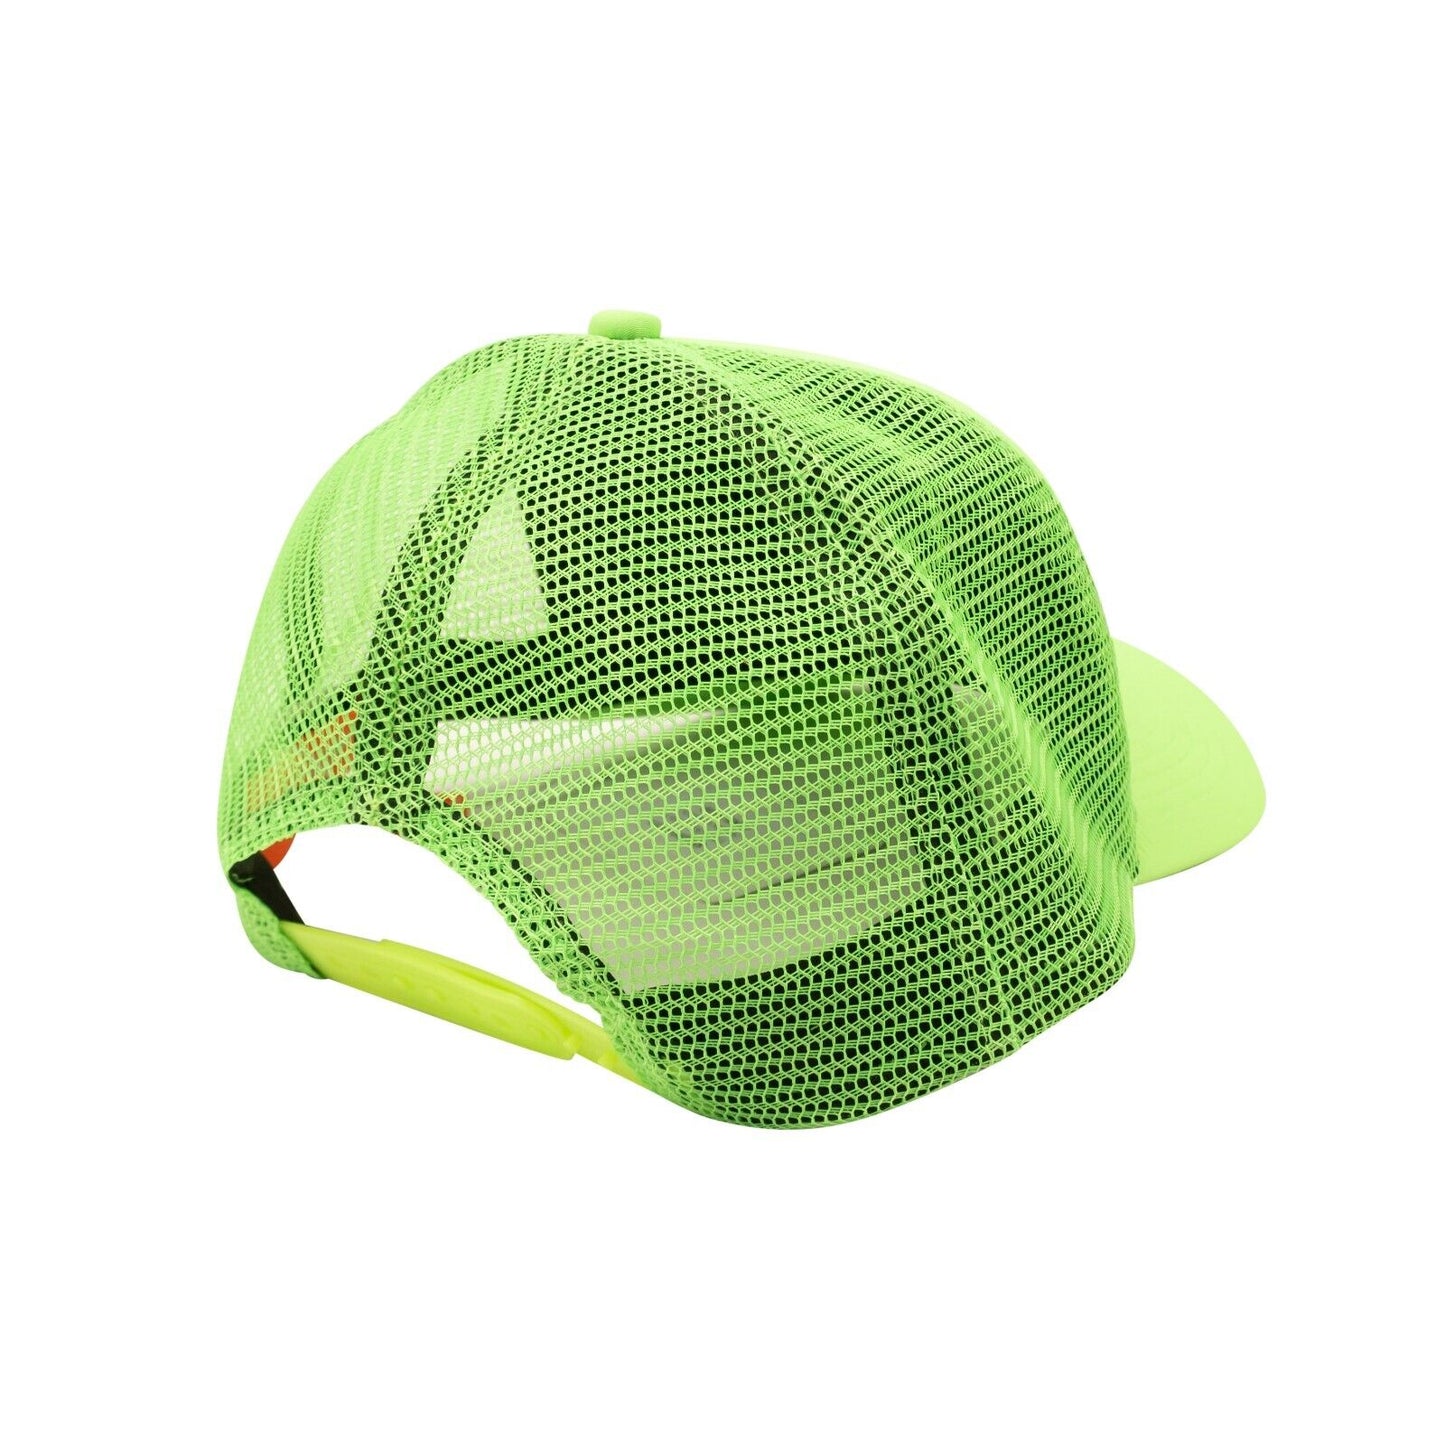 Bossi Trucker Hat - Neon Green